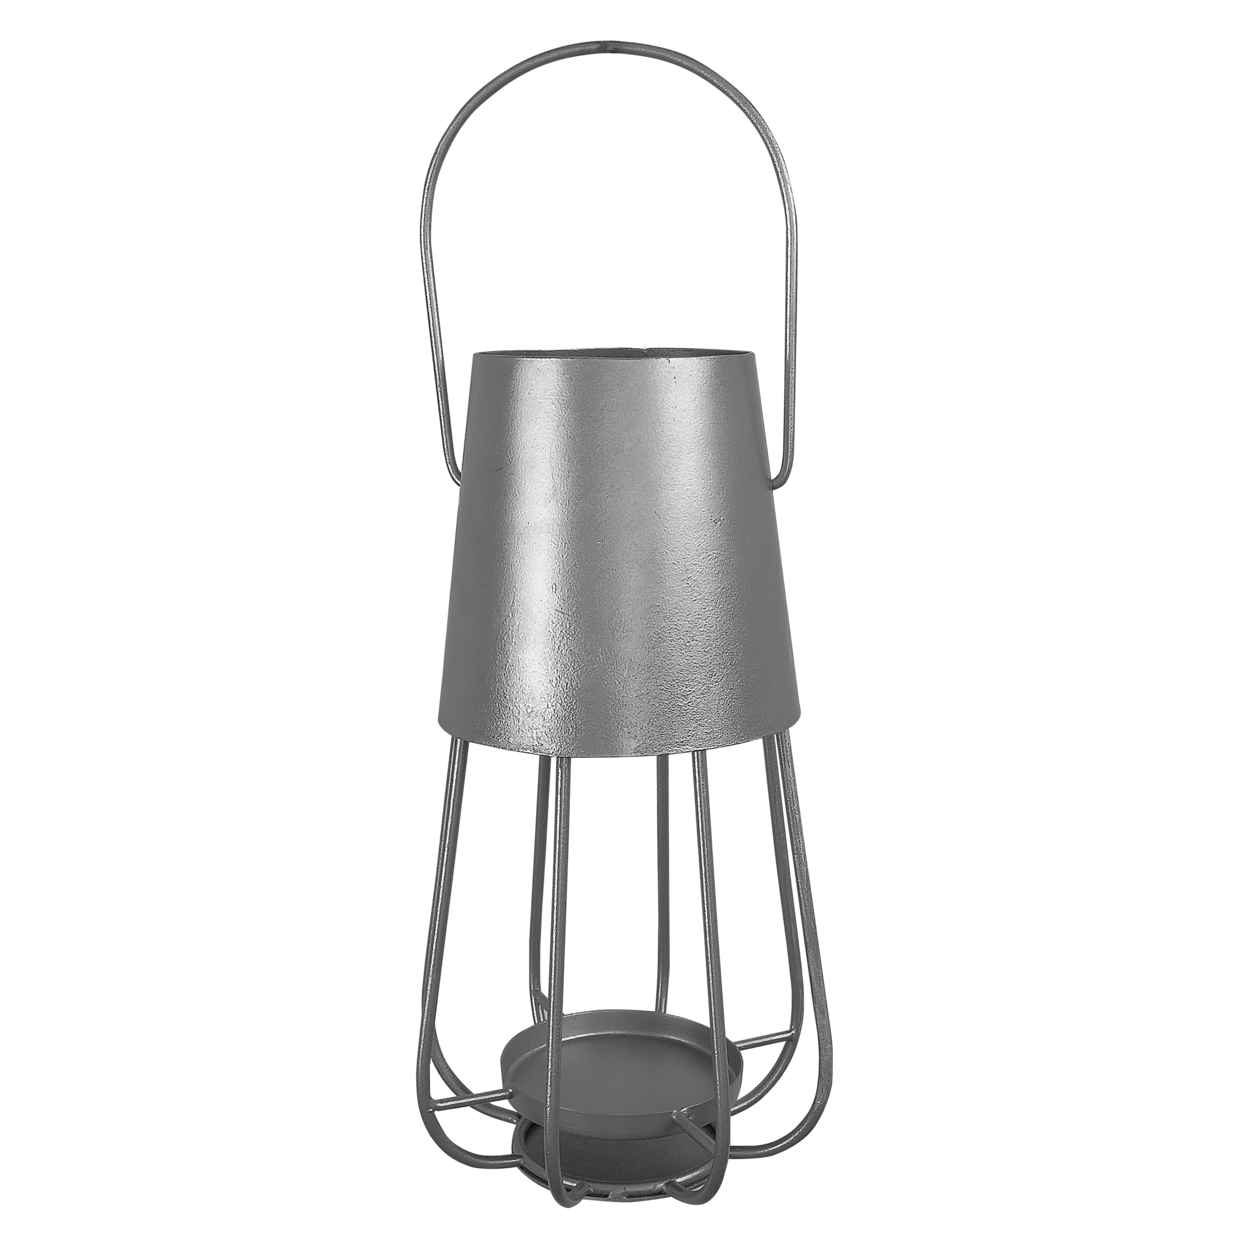 Ambient 12 Inch Vintage Style Iron Candle Stand Lantern, Sleek Curved Handle, Metallic Silver- Saltoro Sherpi